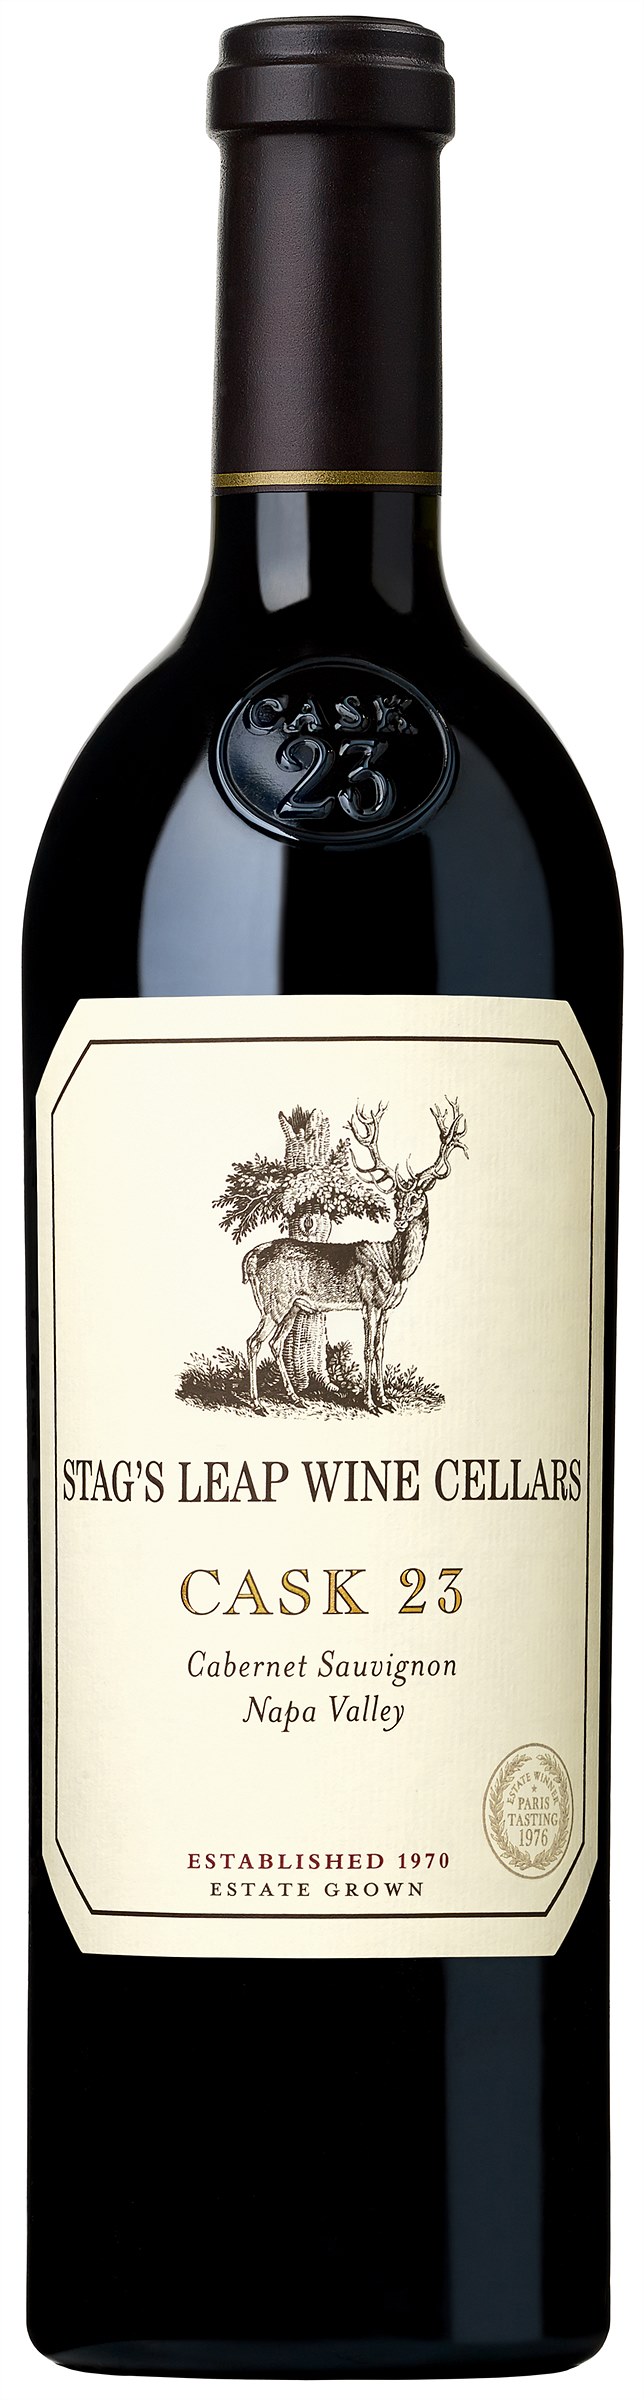 StagÔs Leap Wine Cellars_Cask23_cb_nv